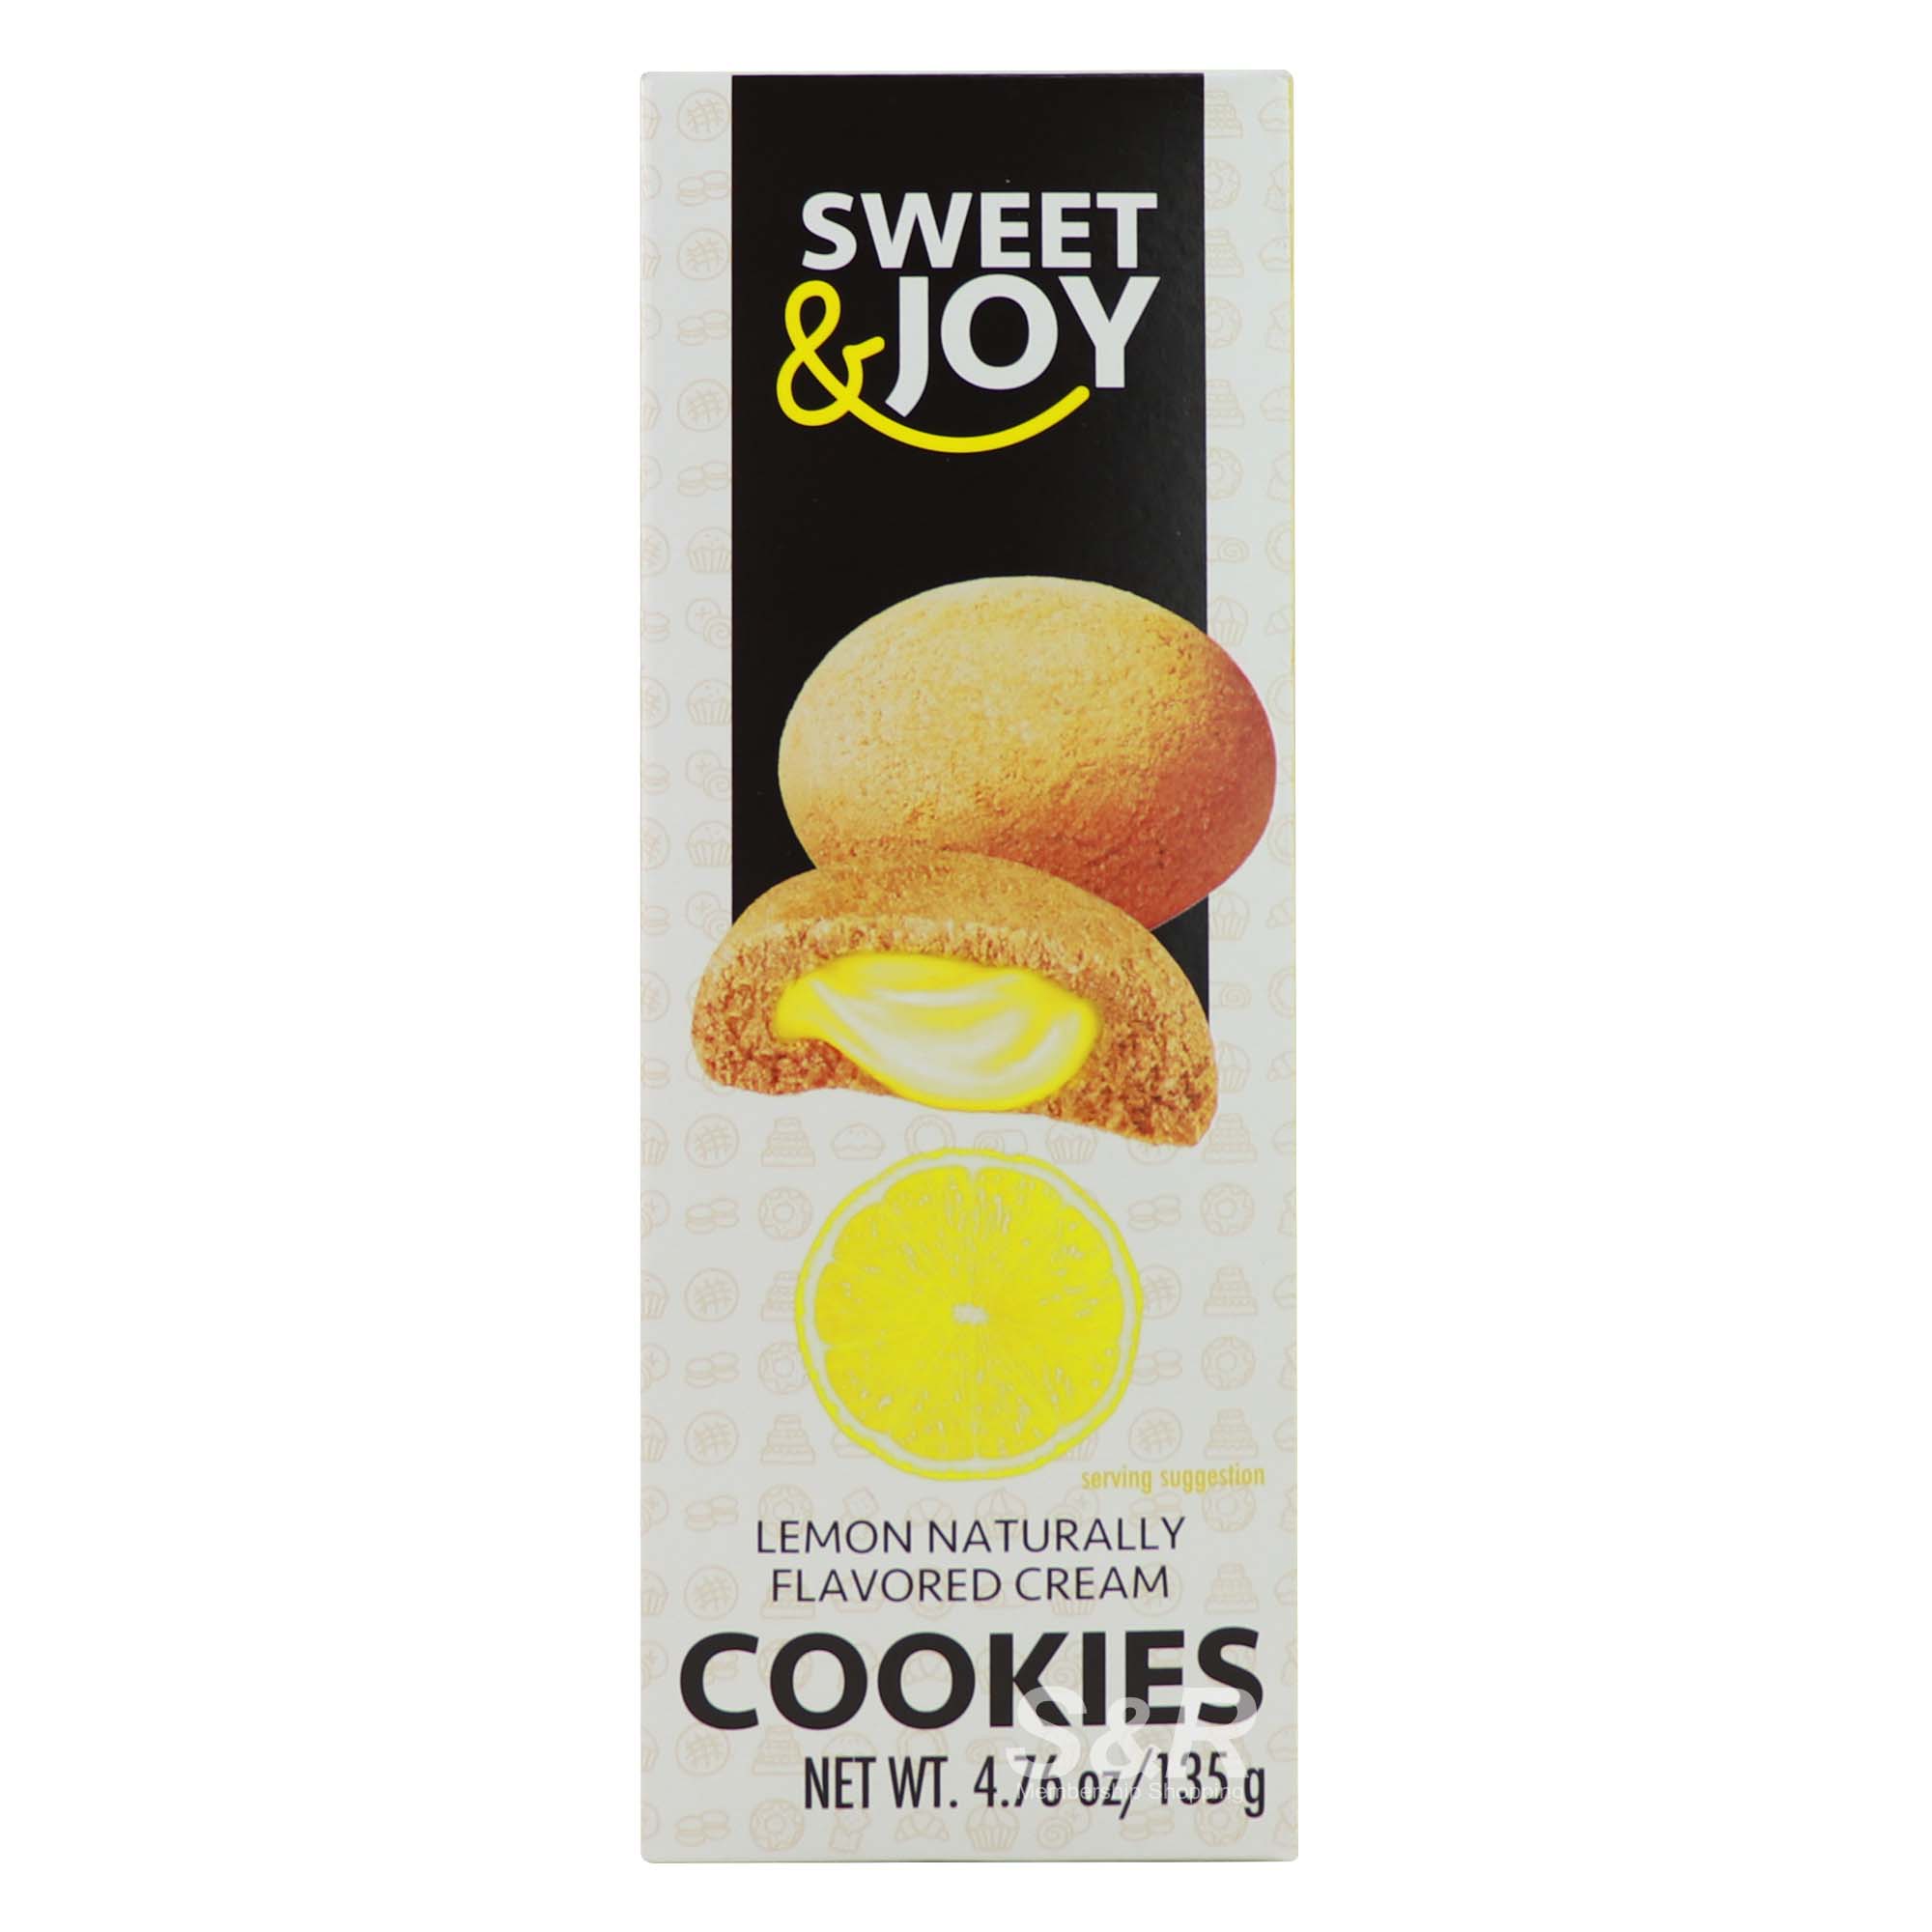 Sweet & Joy Lemon Naturally Flavored Cream Cookies (17g x 8pcs)